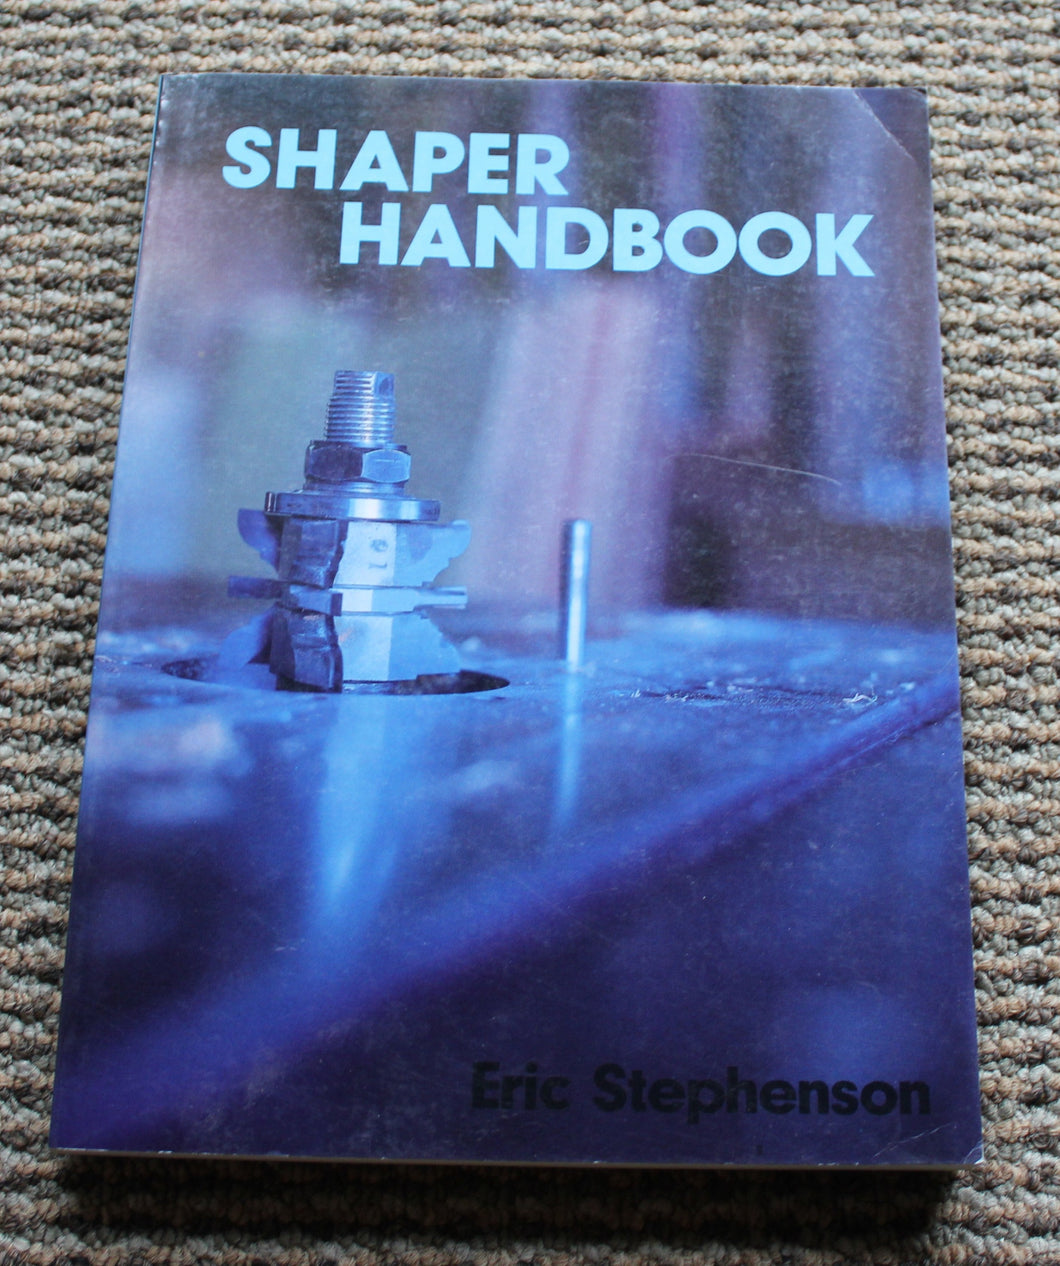 Shaper Hanbook Eric Stephenson